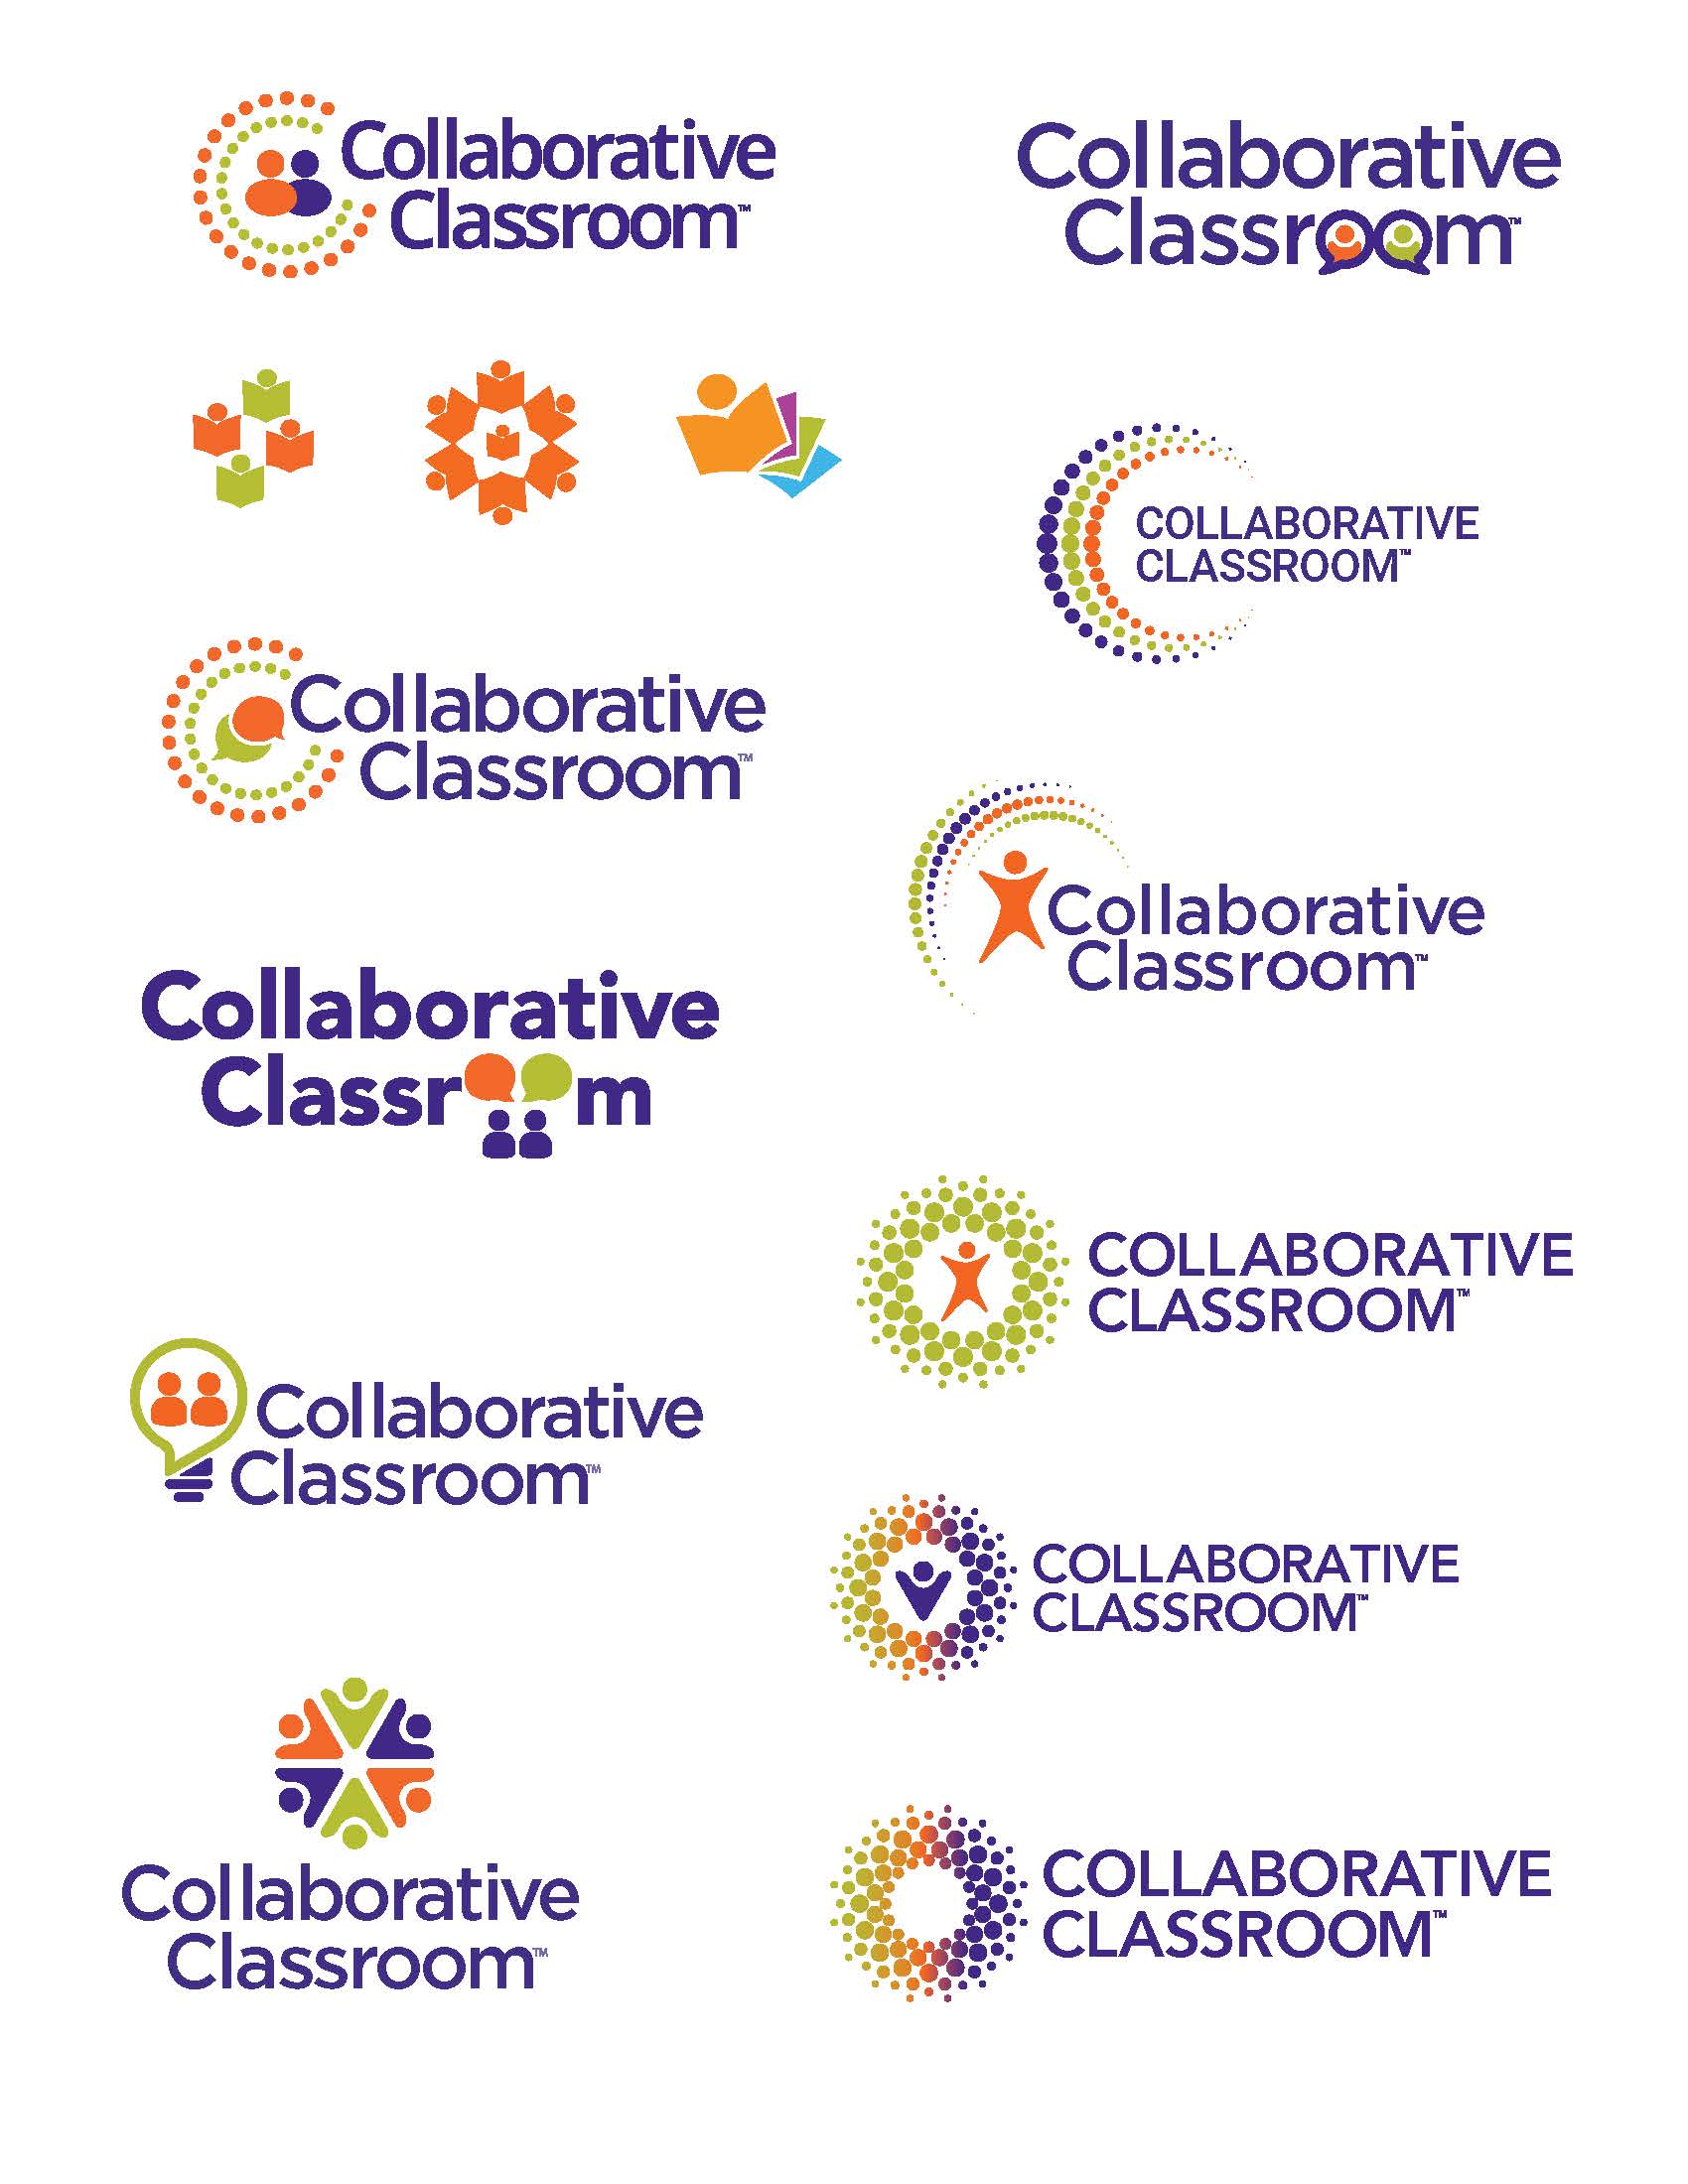 Collaborative Classroom logo mockups